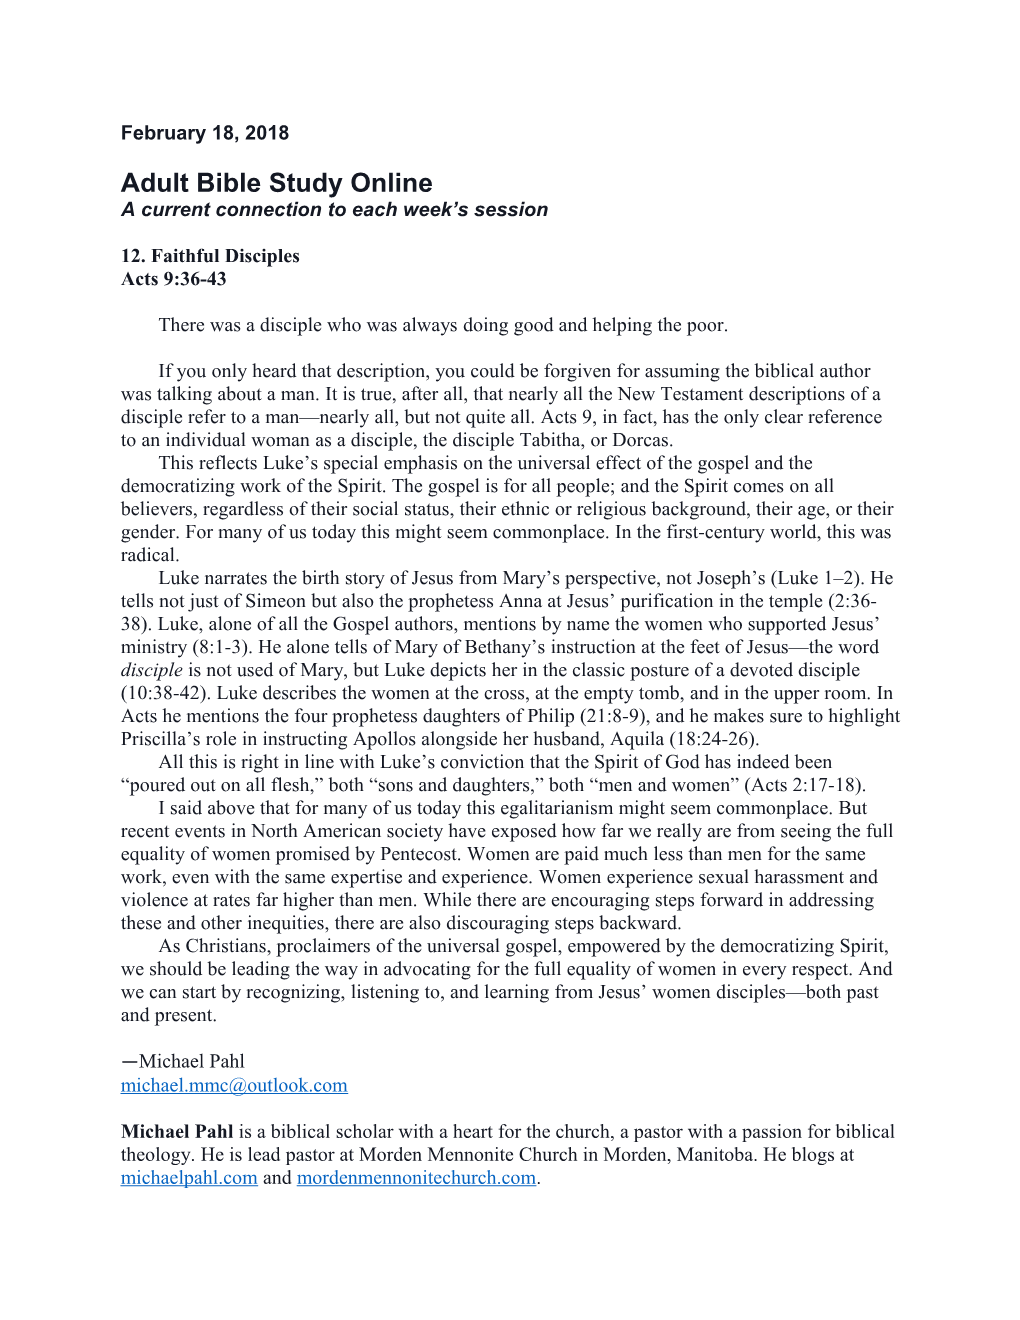 Adult Bible Study Online s1